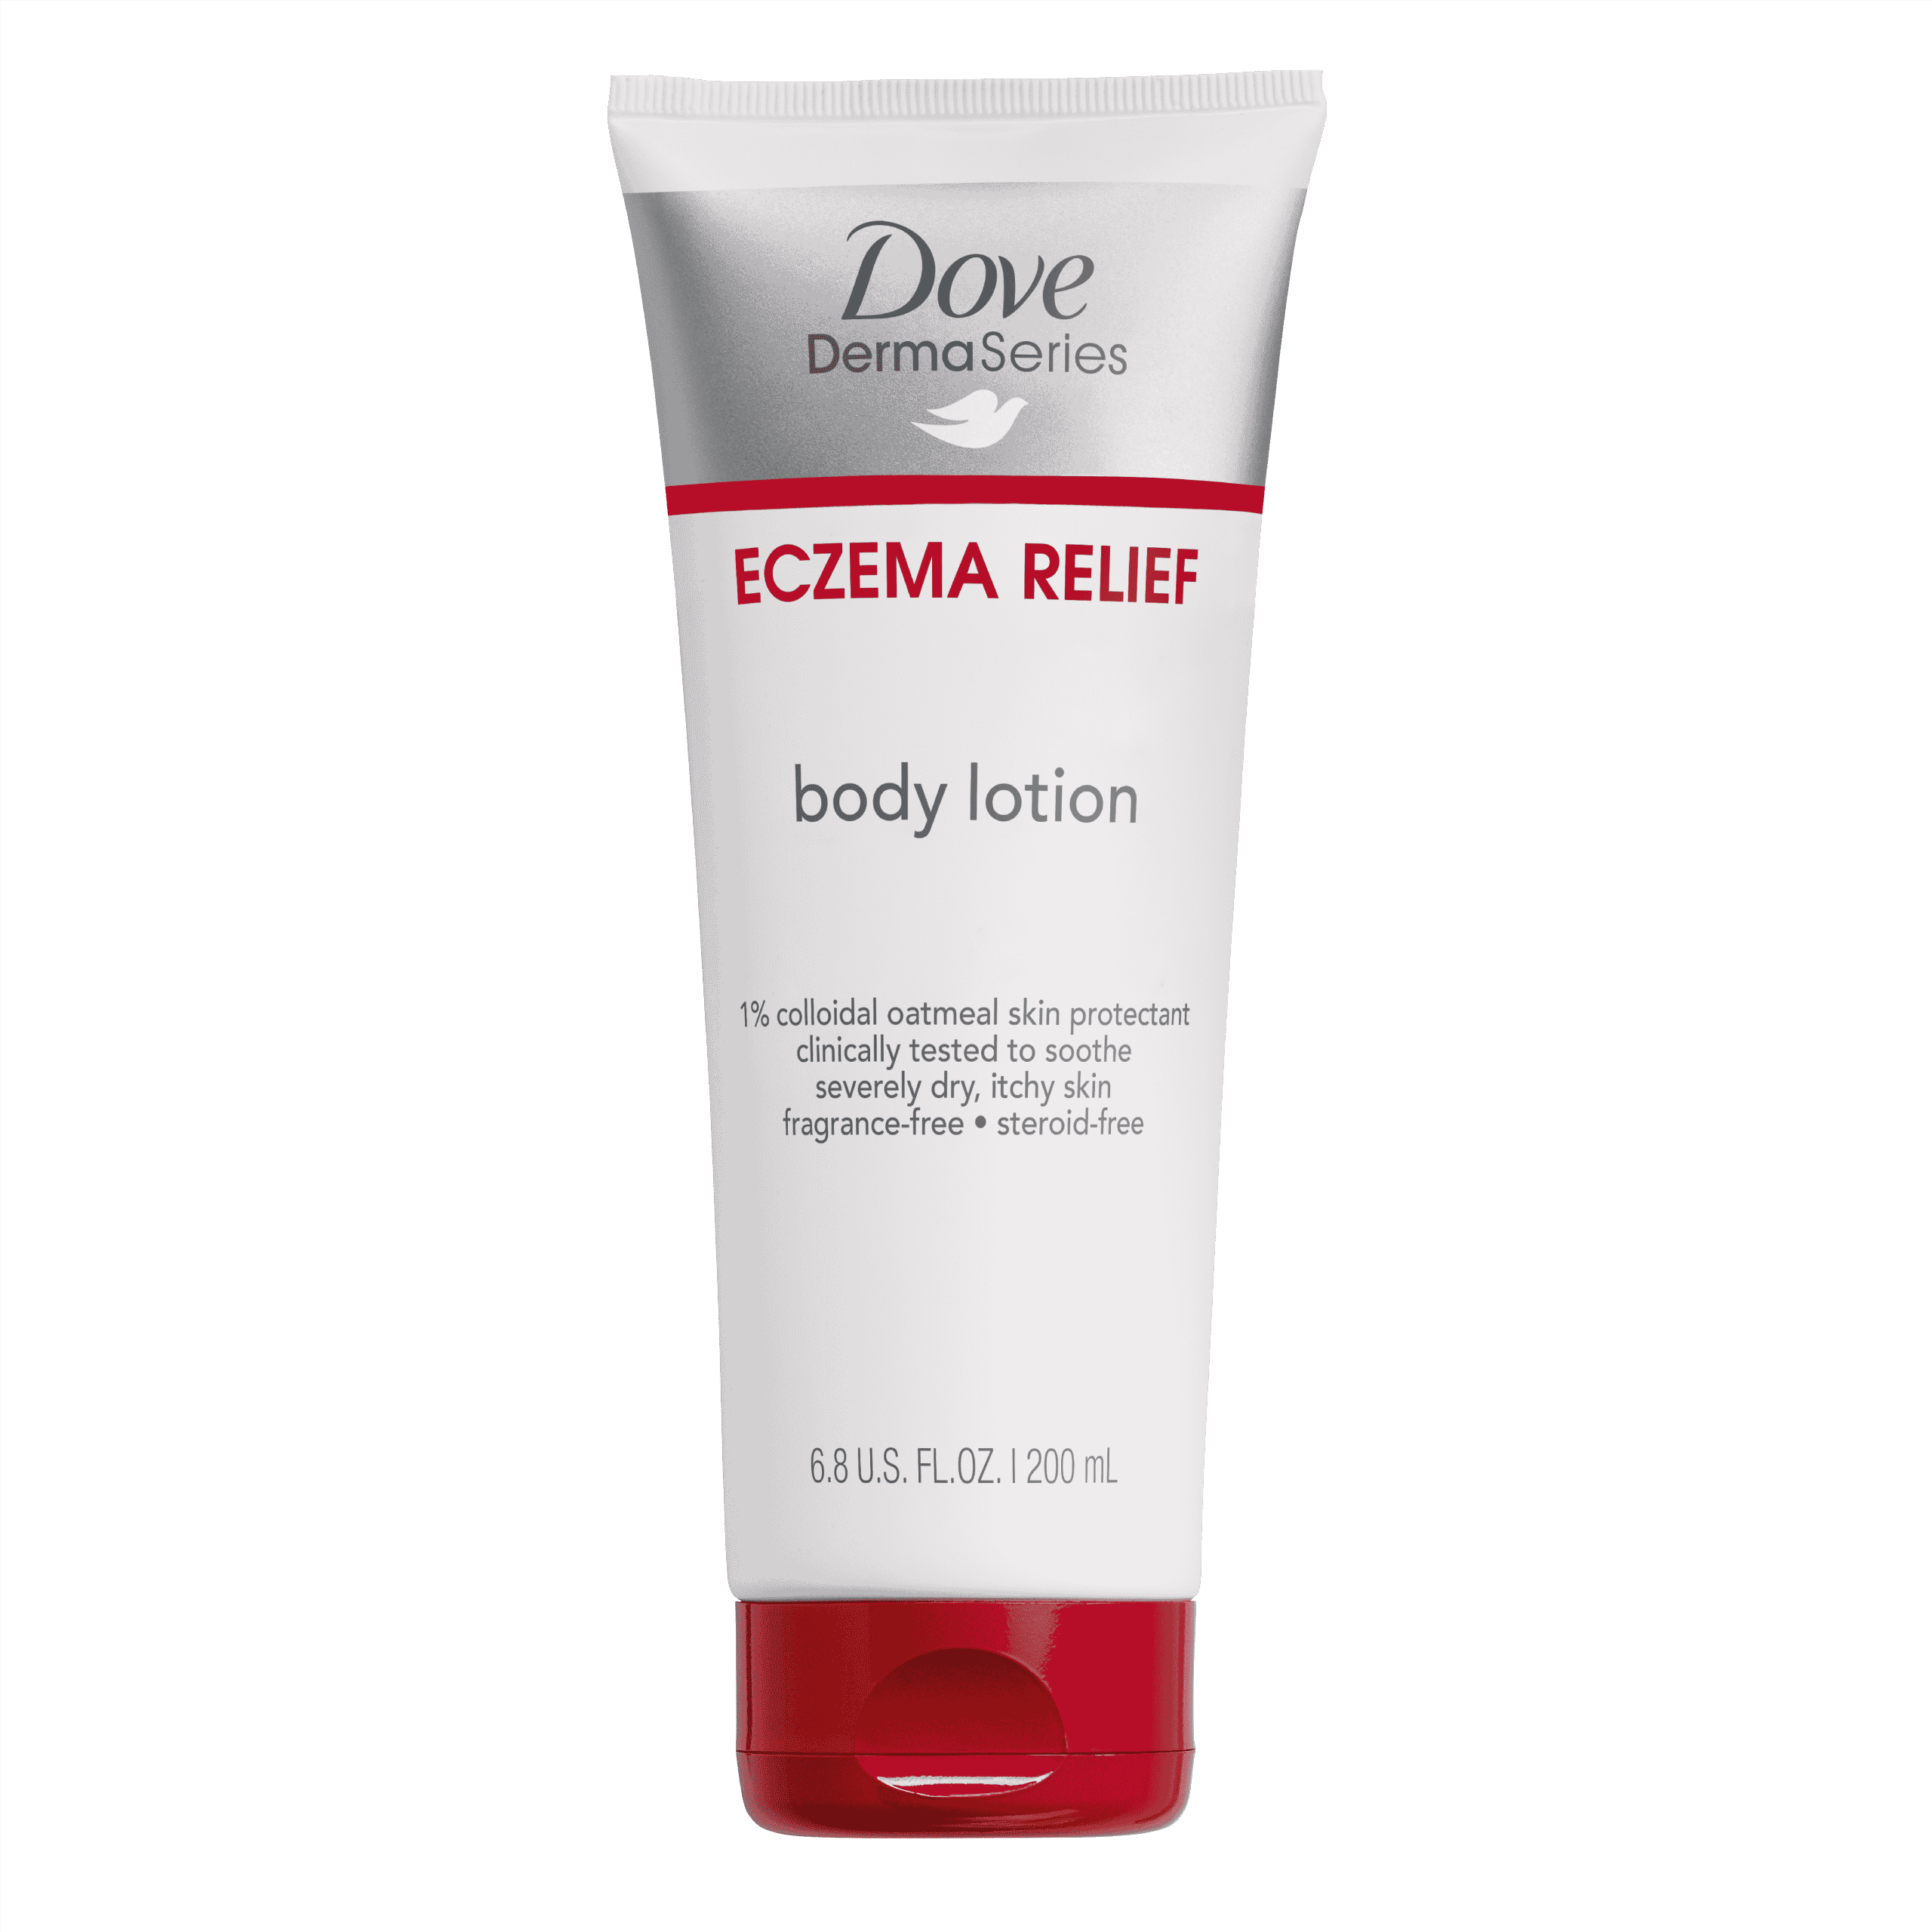 Dove DermaSeries Eczema Relief Body Lotion